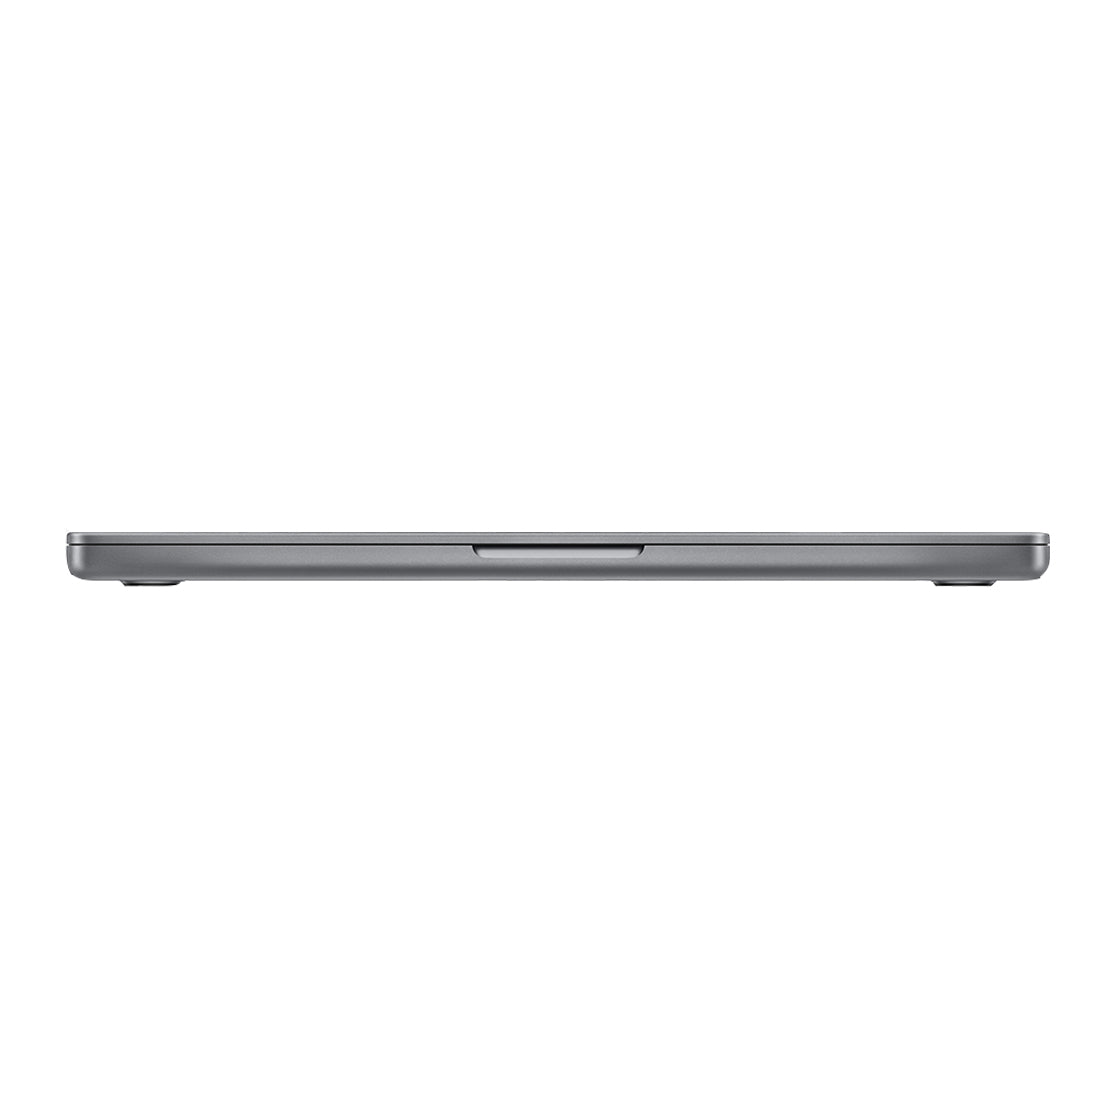 M3 MacBook: Aesthetic precision unfolds